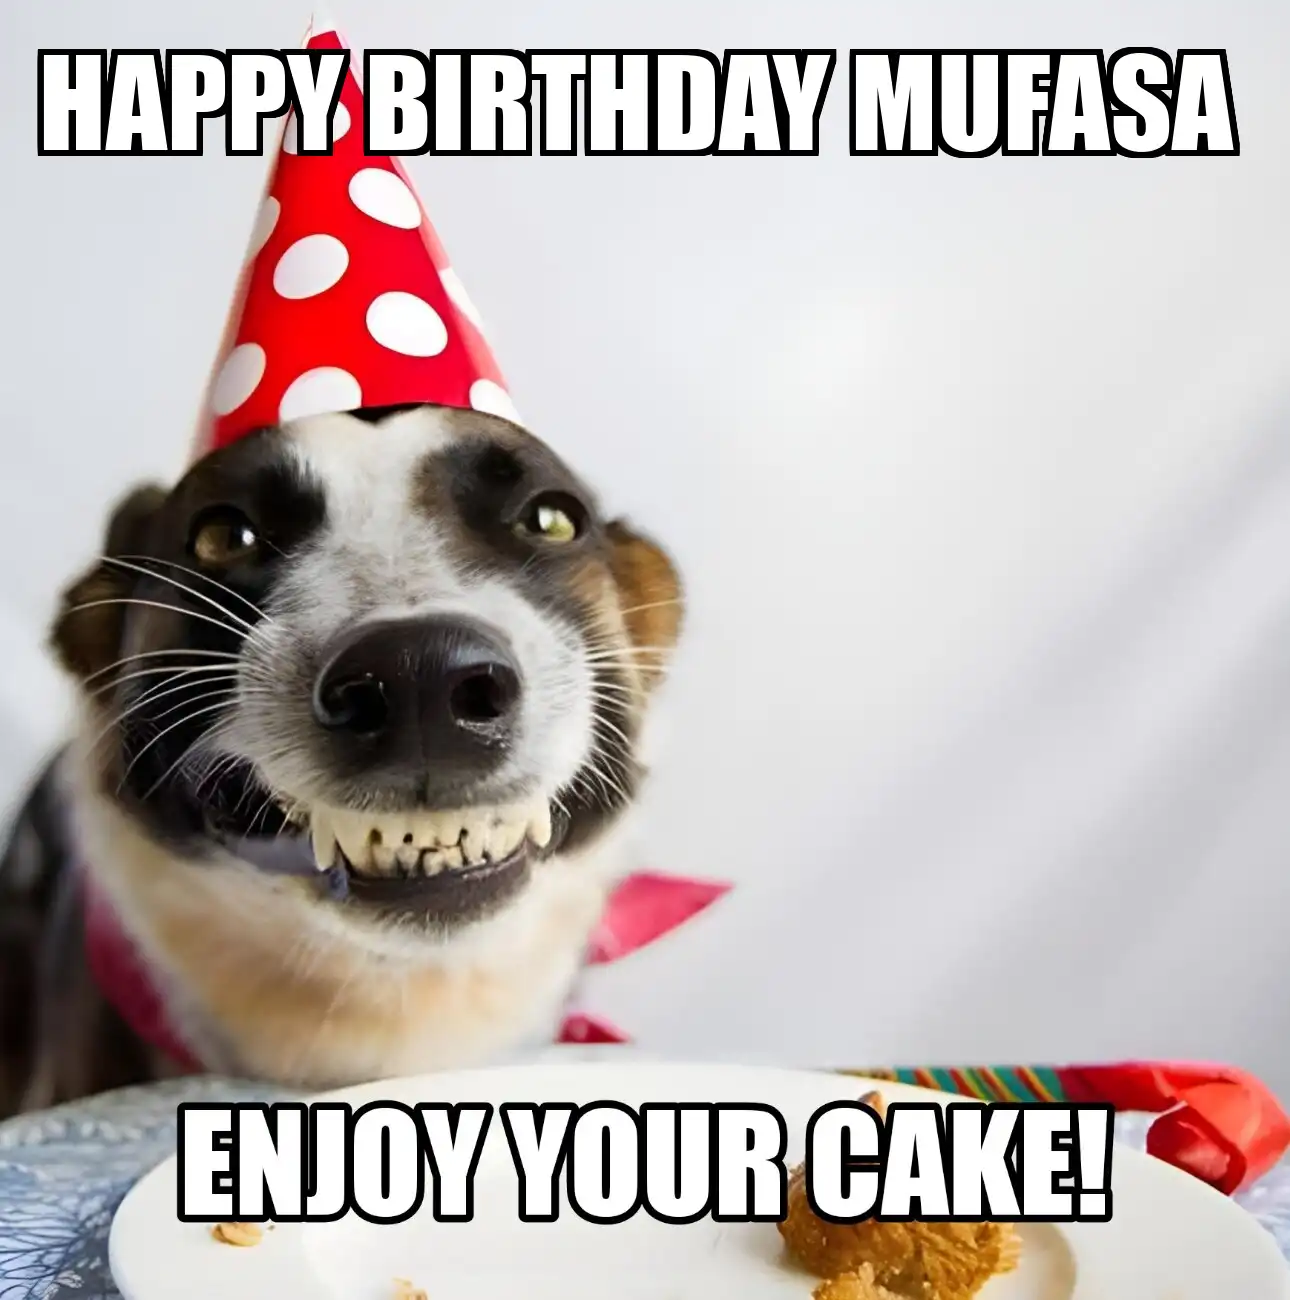 Happy Birthday Mufasa Enjoy Your Cake Dog Meme